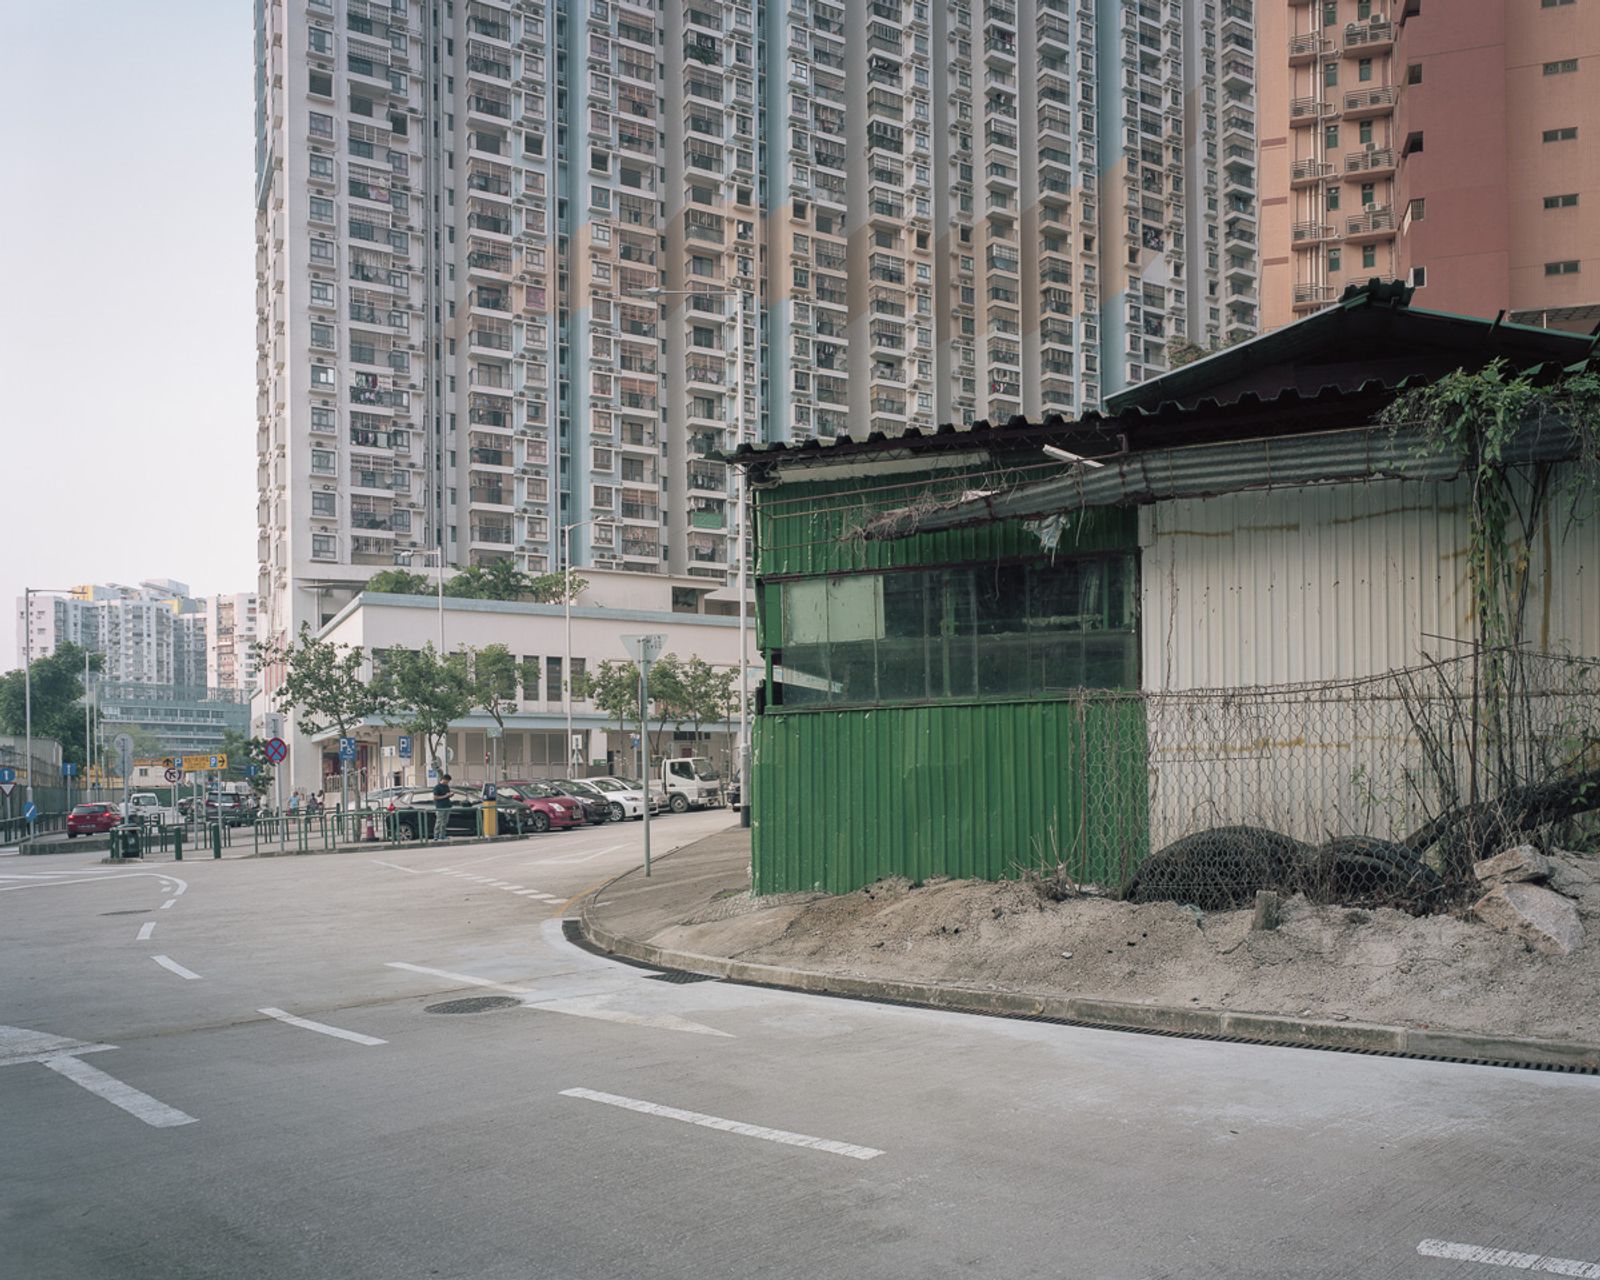 © Adam Lampton - Apartment Buildings, Taipa, Macao (Img#: 12) (Size: 28x30") Archival Inkjet Print (2019)